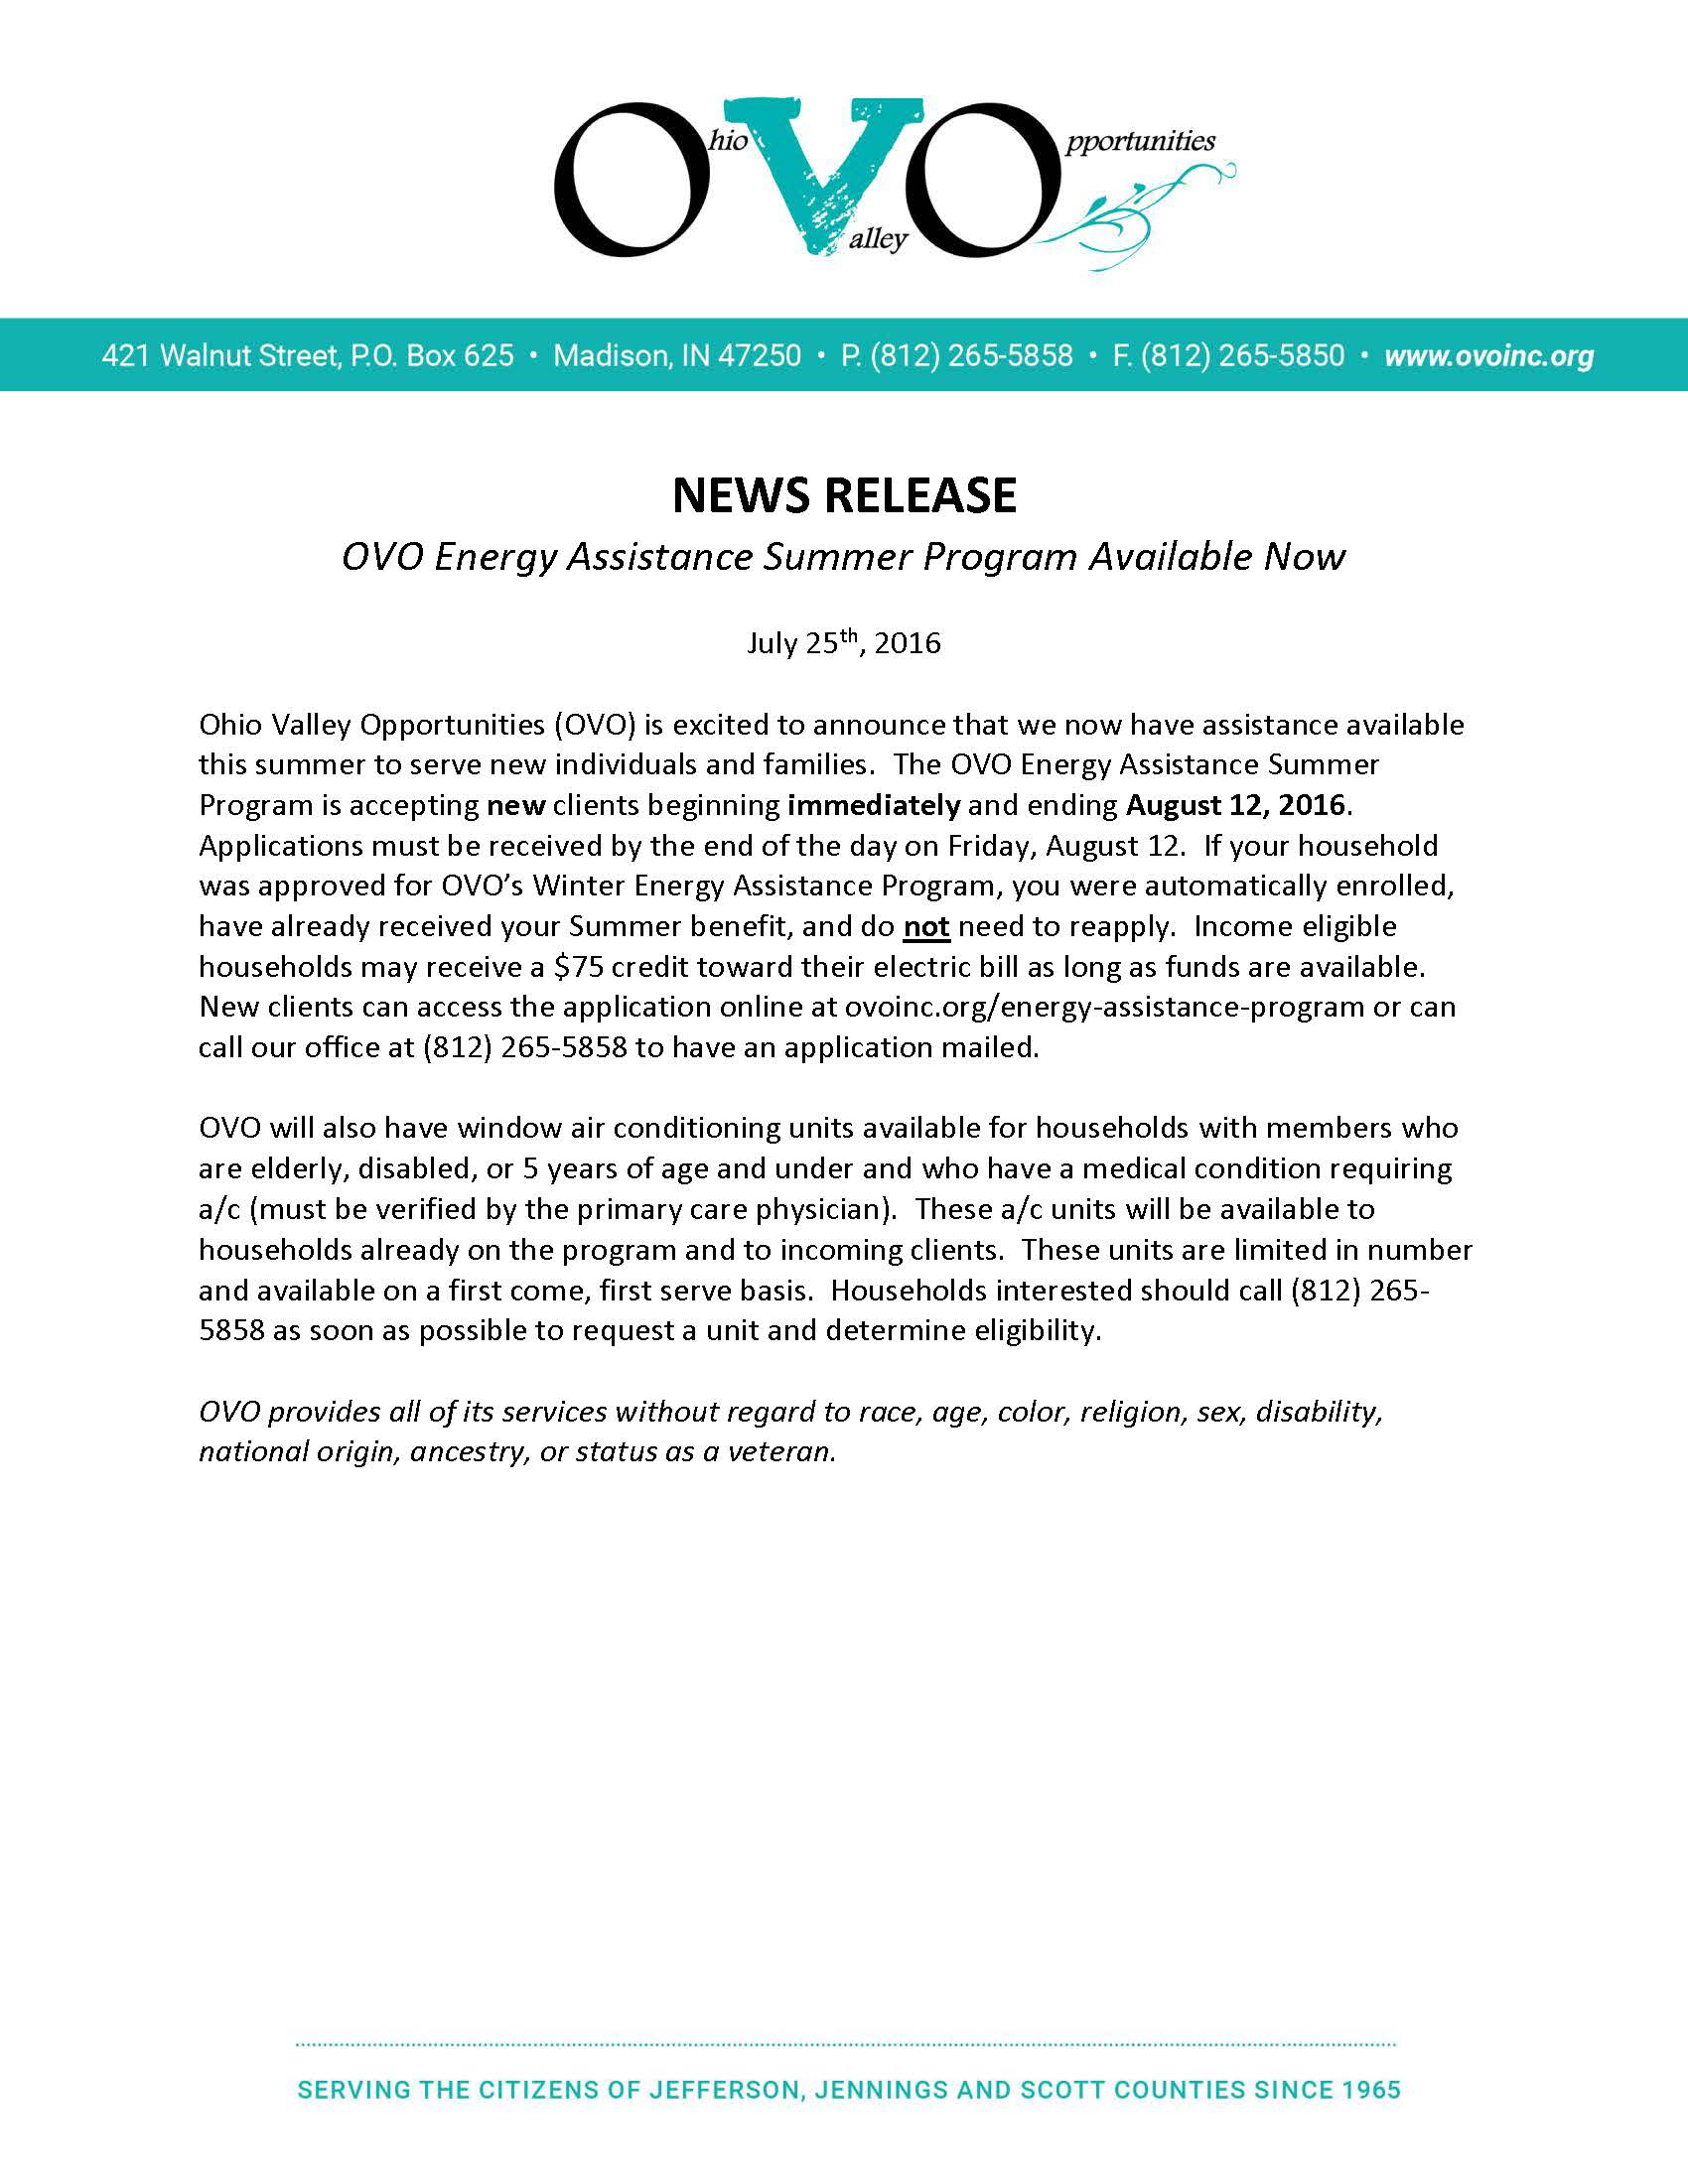 OVO 2016 Summer Energy Assistance Program